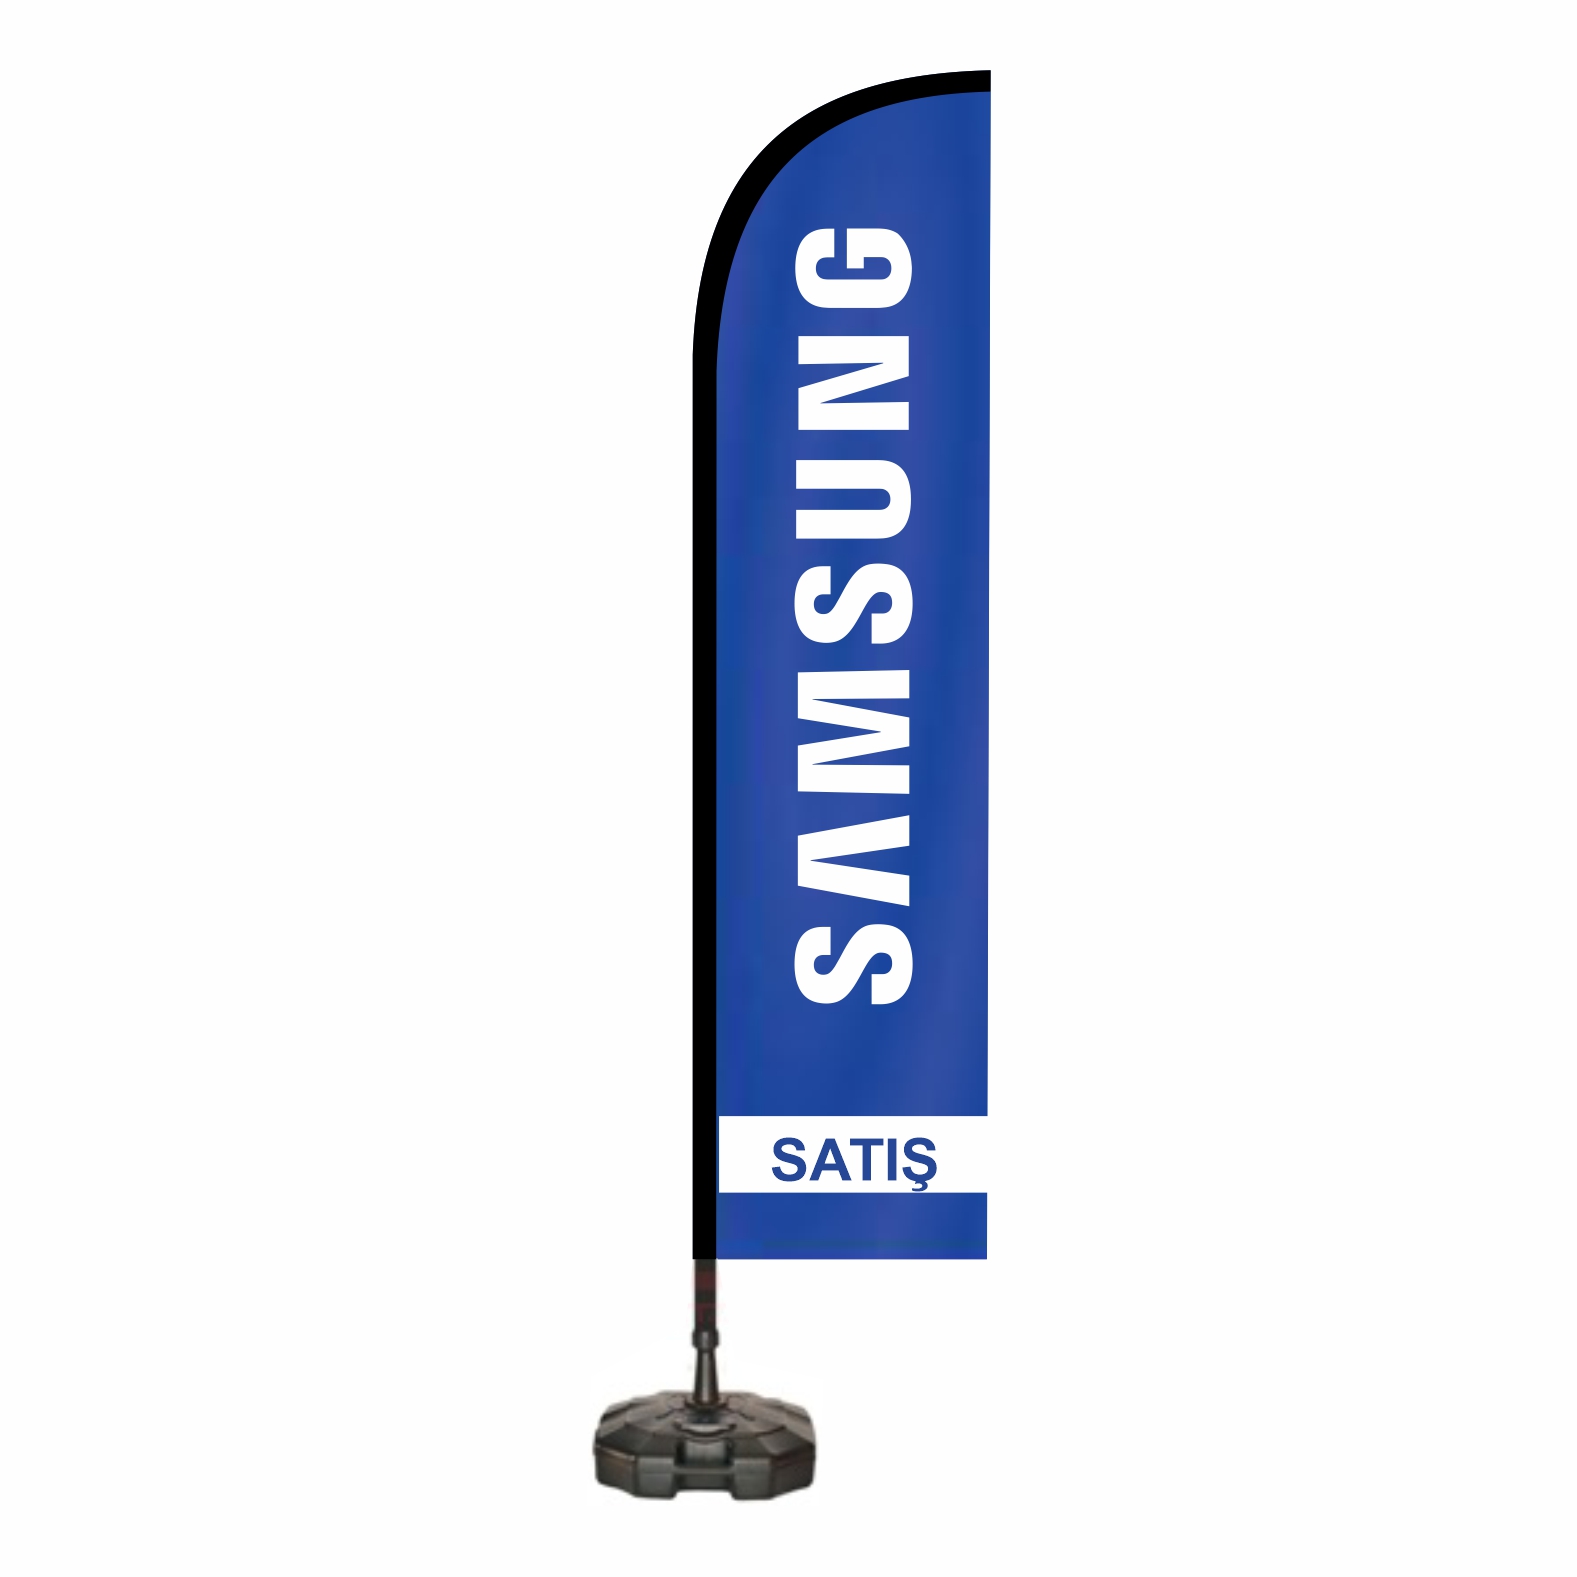 Samsung Dubal Bayraklar